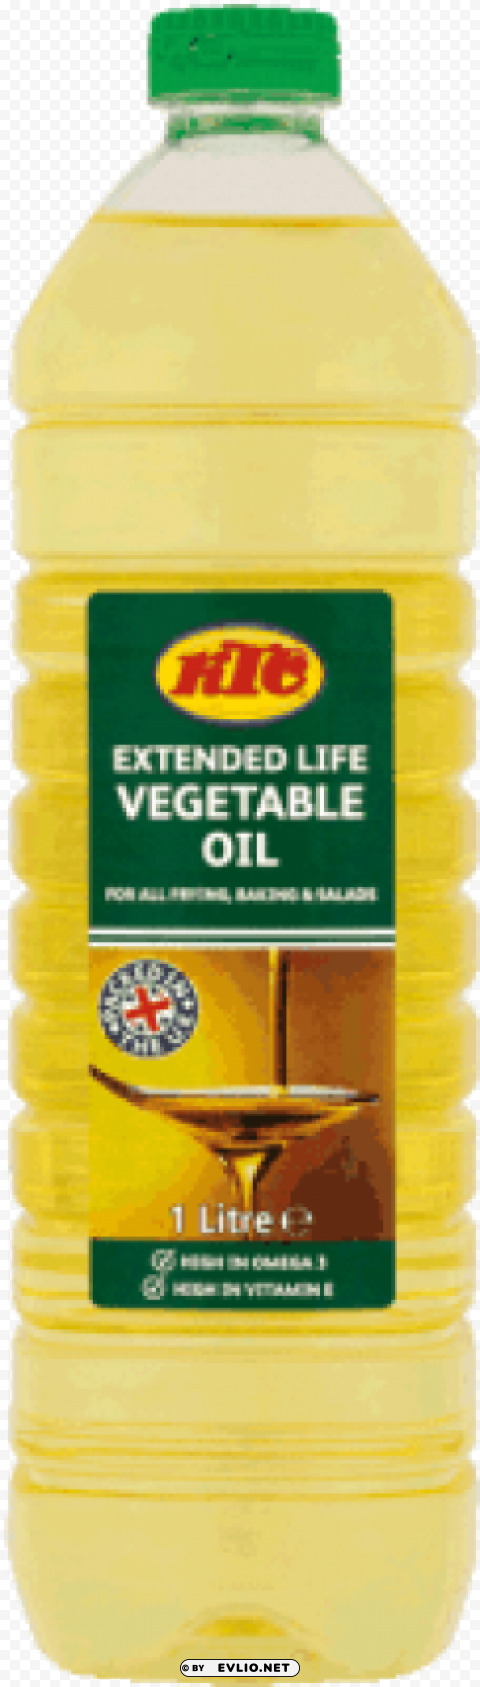 ktc vegetable oil Transparent PNG images collection